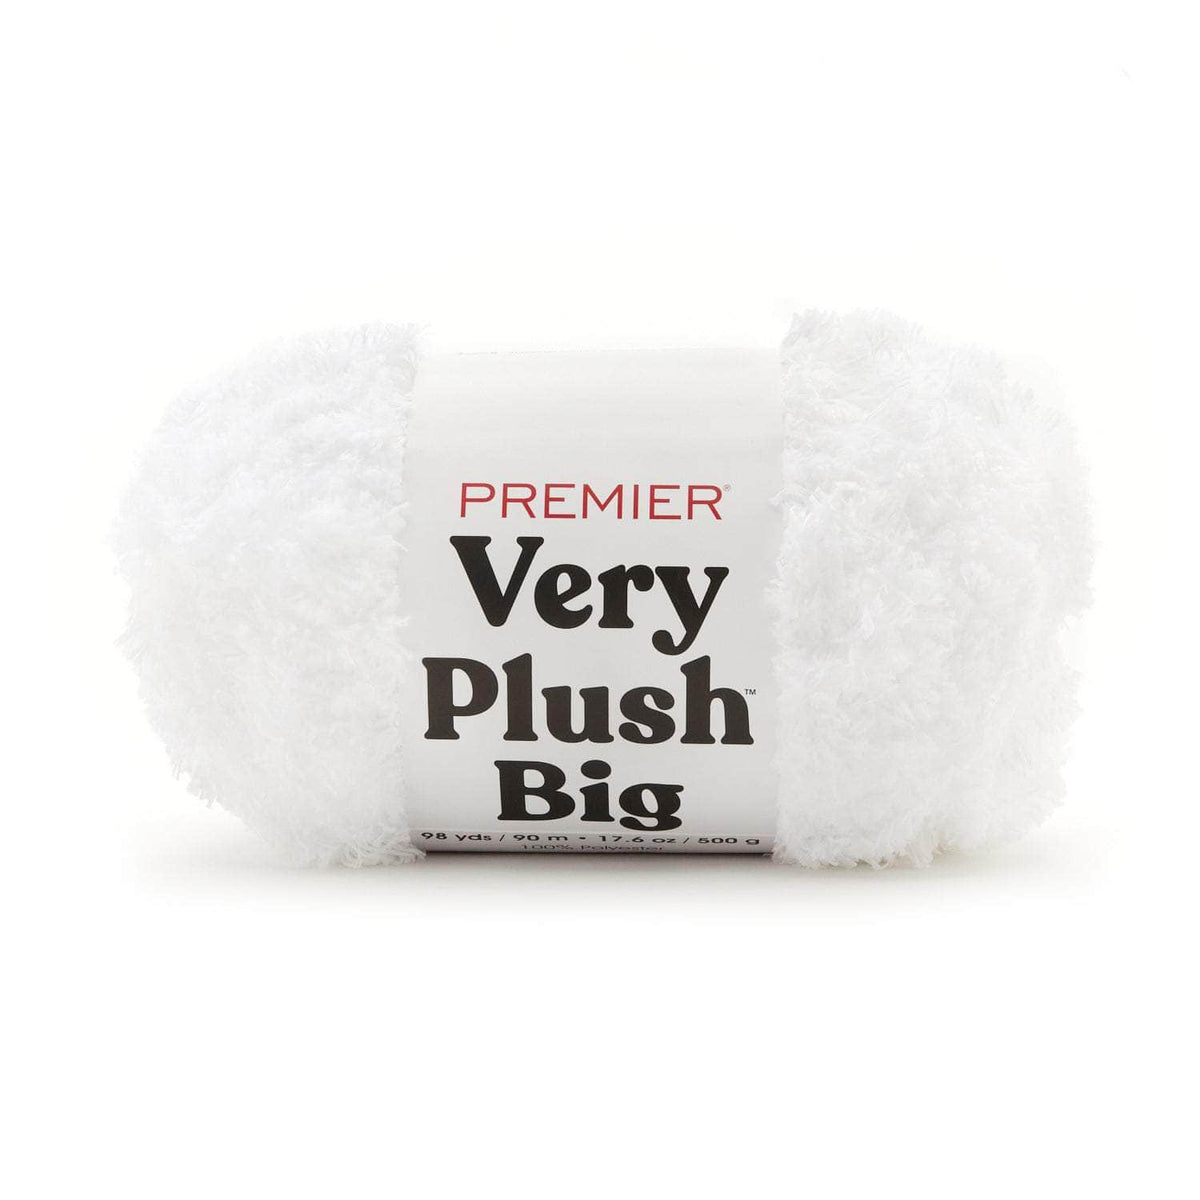 Our Premier® Very Plush Big Premier Yarns X provides top-quality